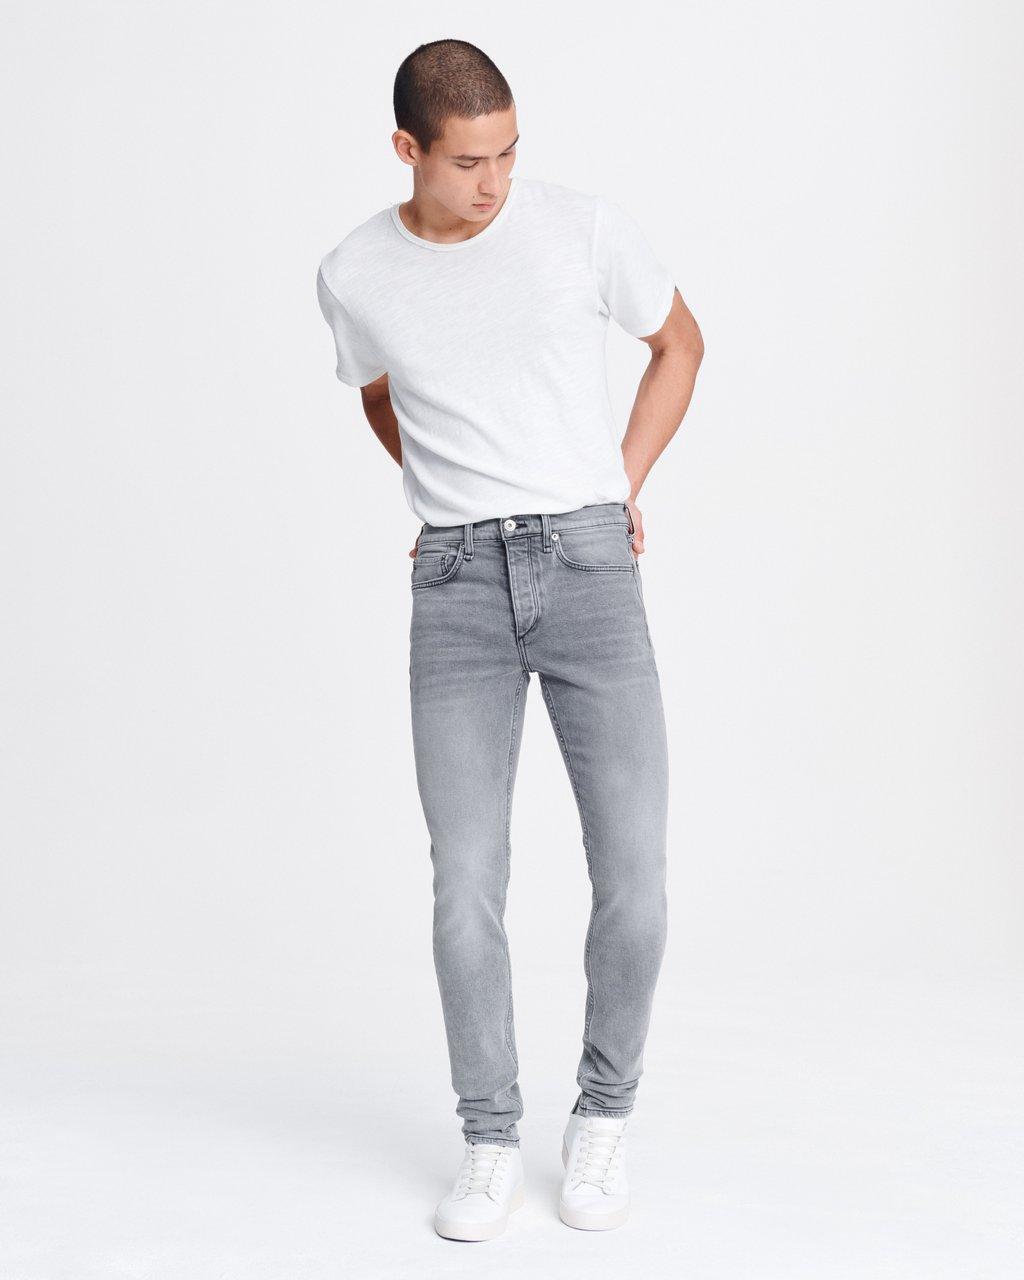 Fit 1 Slim Jeans for Men in Greyson | rag & bone